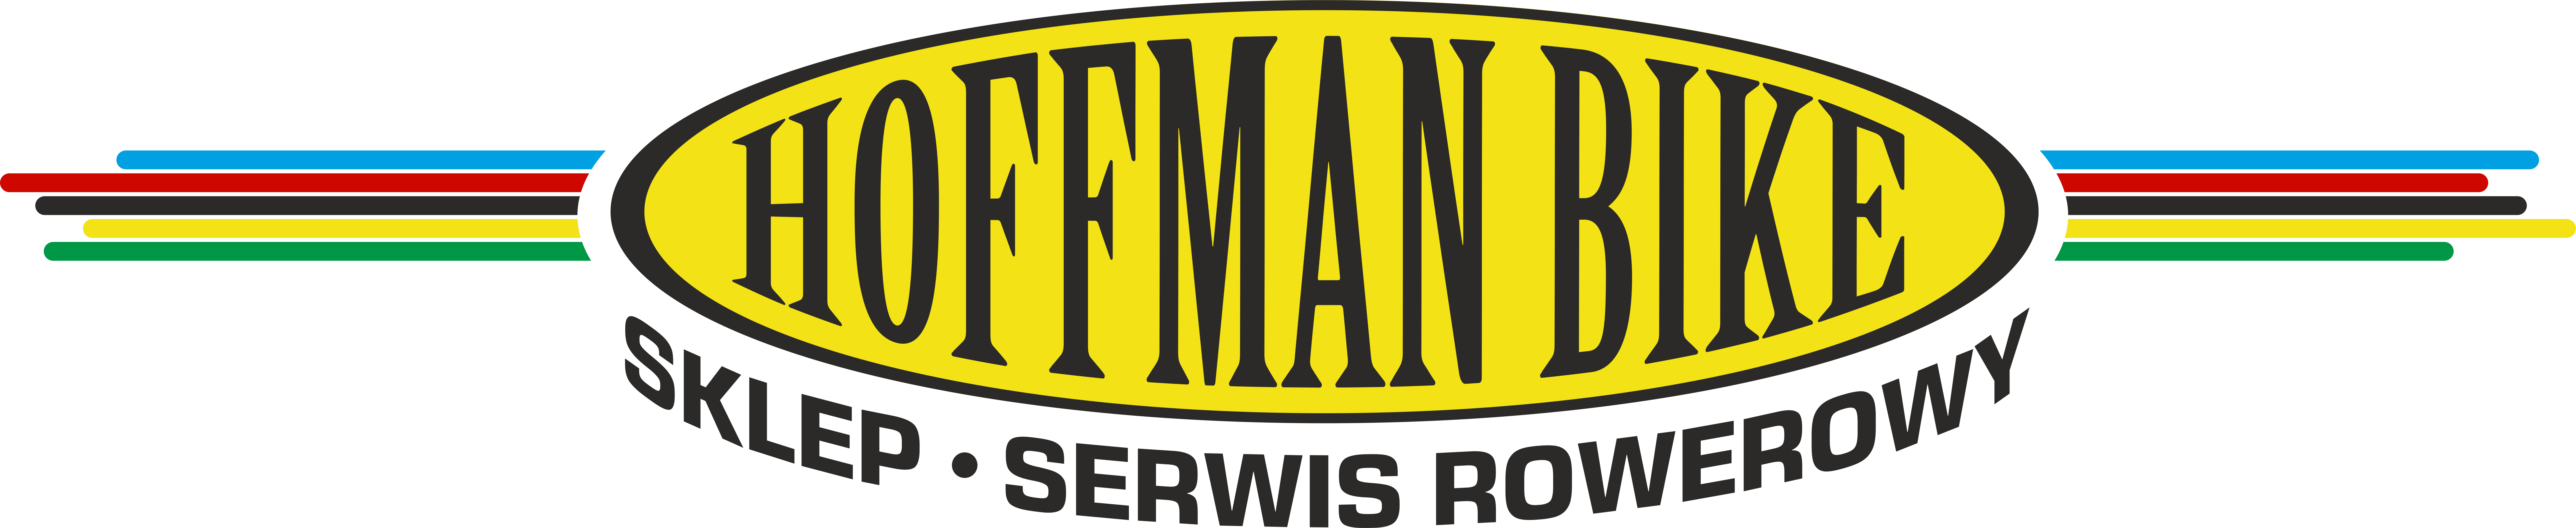 hoffman logo 2